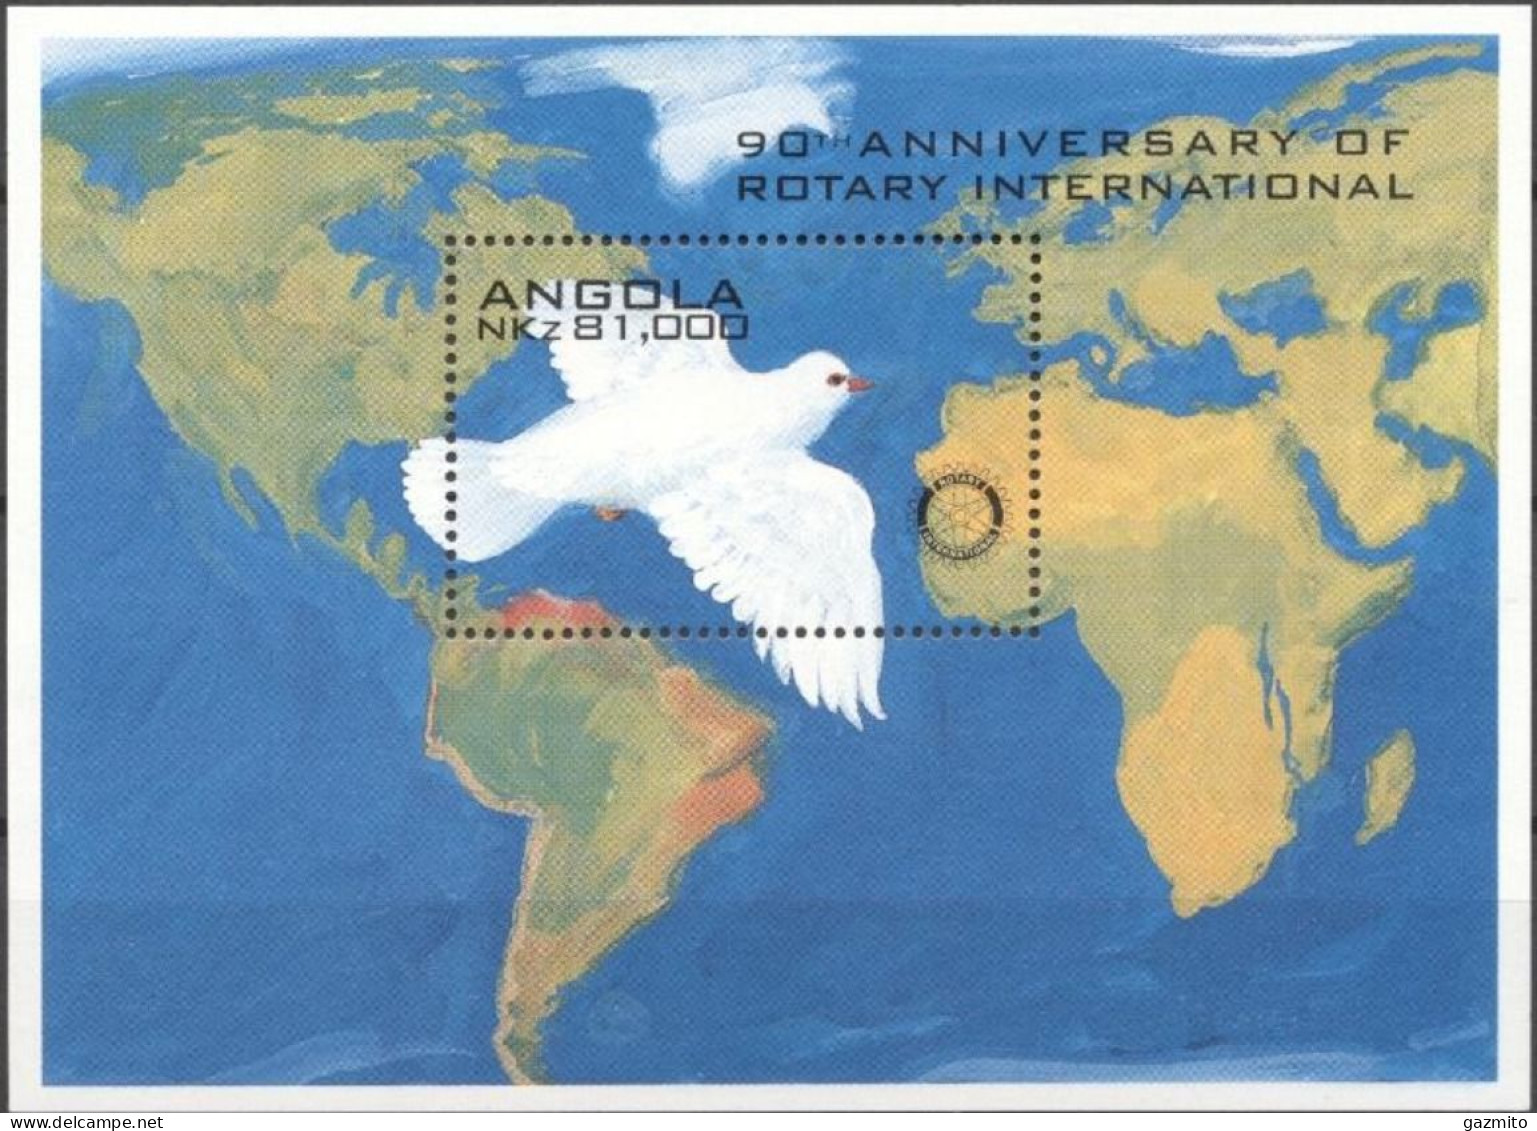 Angola 1995, Rotary, Block - Rotary, Lions Club